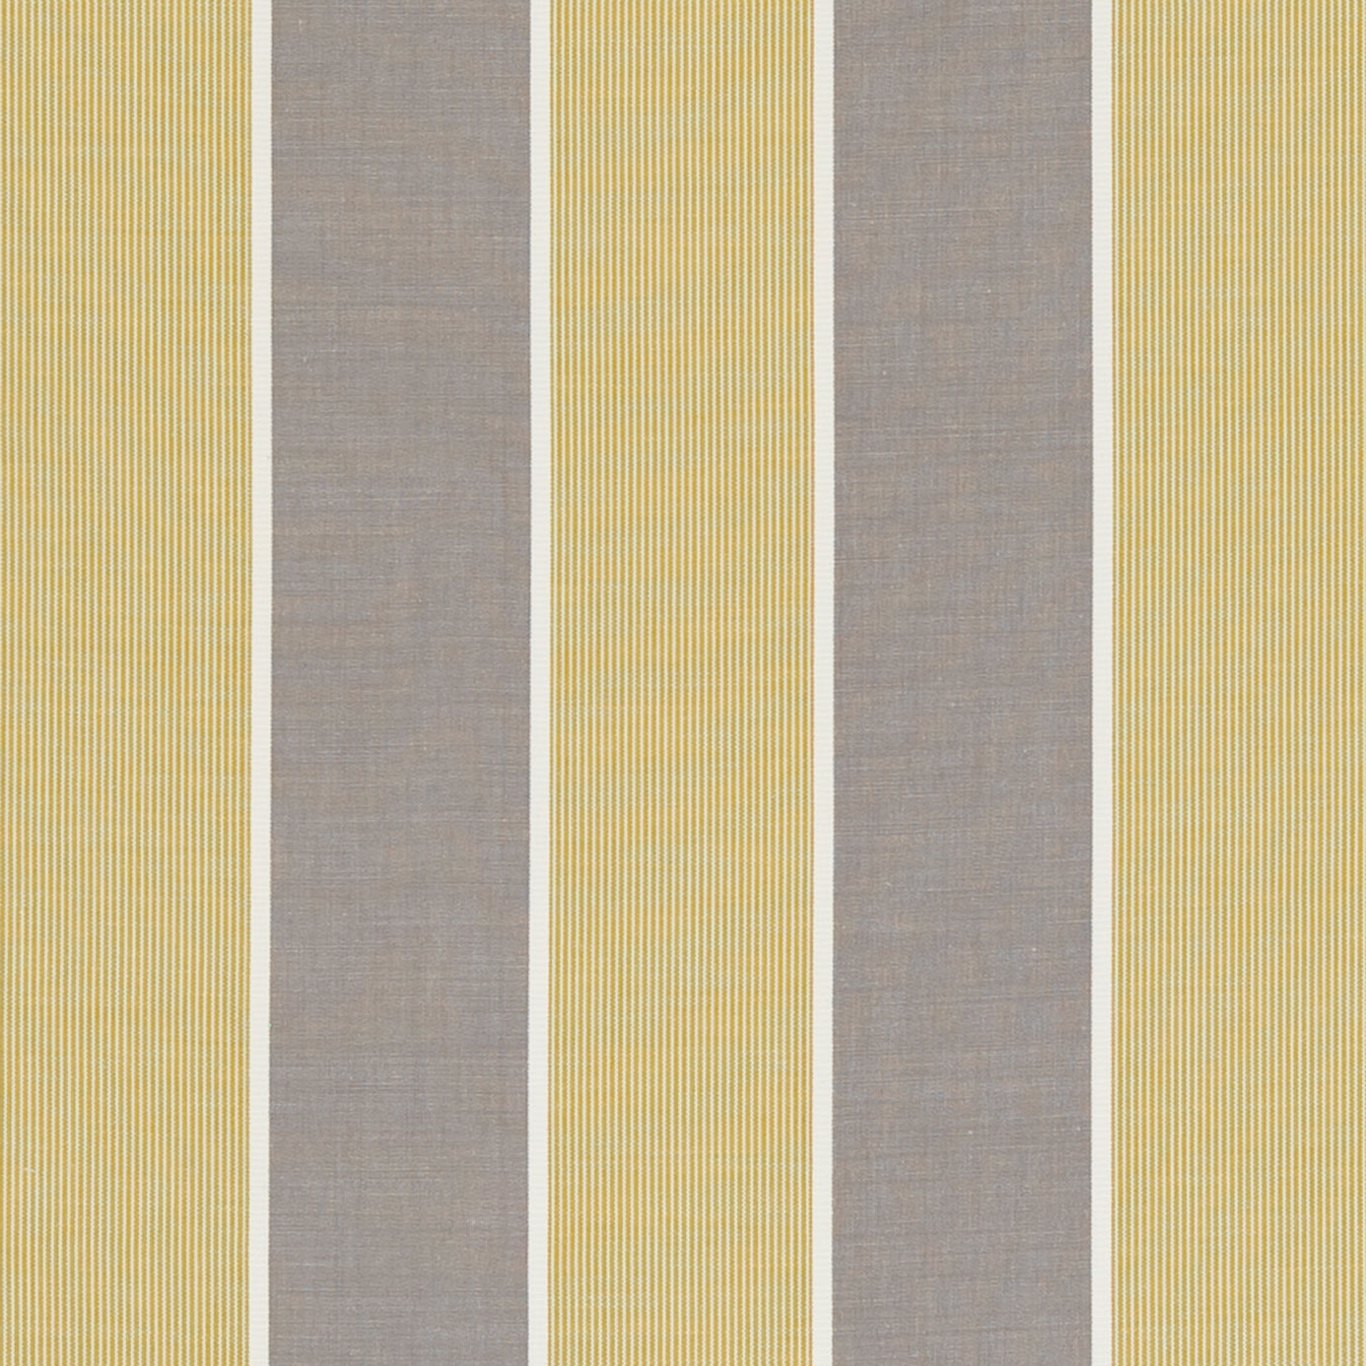 Chatburn Fabric by Clarke & Clarke - F0597/01 - Citrus